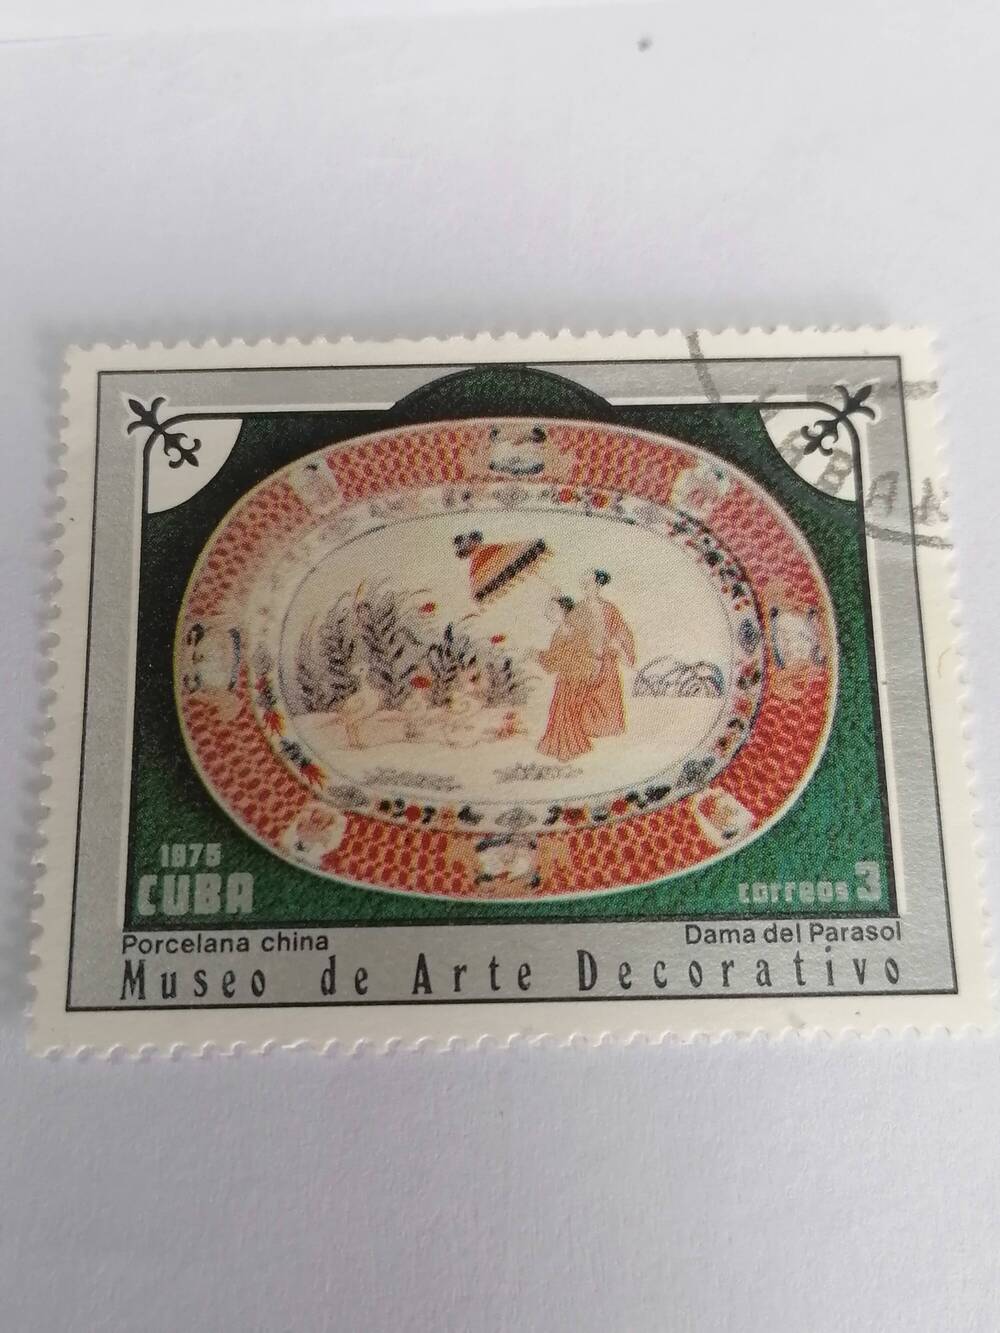 Марка почтовая гашеная, Cuba Correos,Куба,1975 г,Museo de Arte Decorativo. Porcelana china. Dama del Parasol